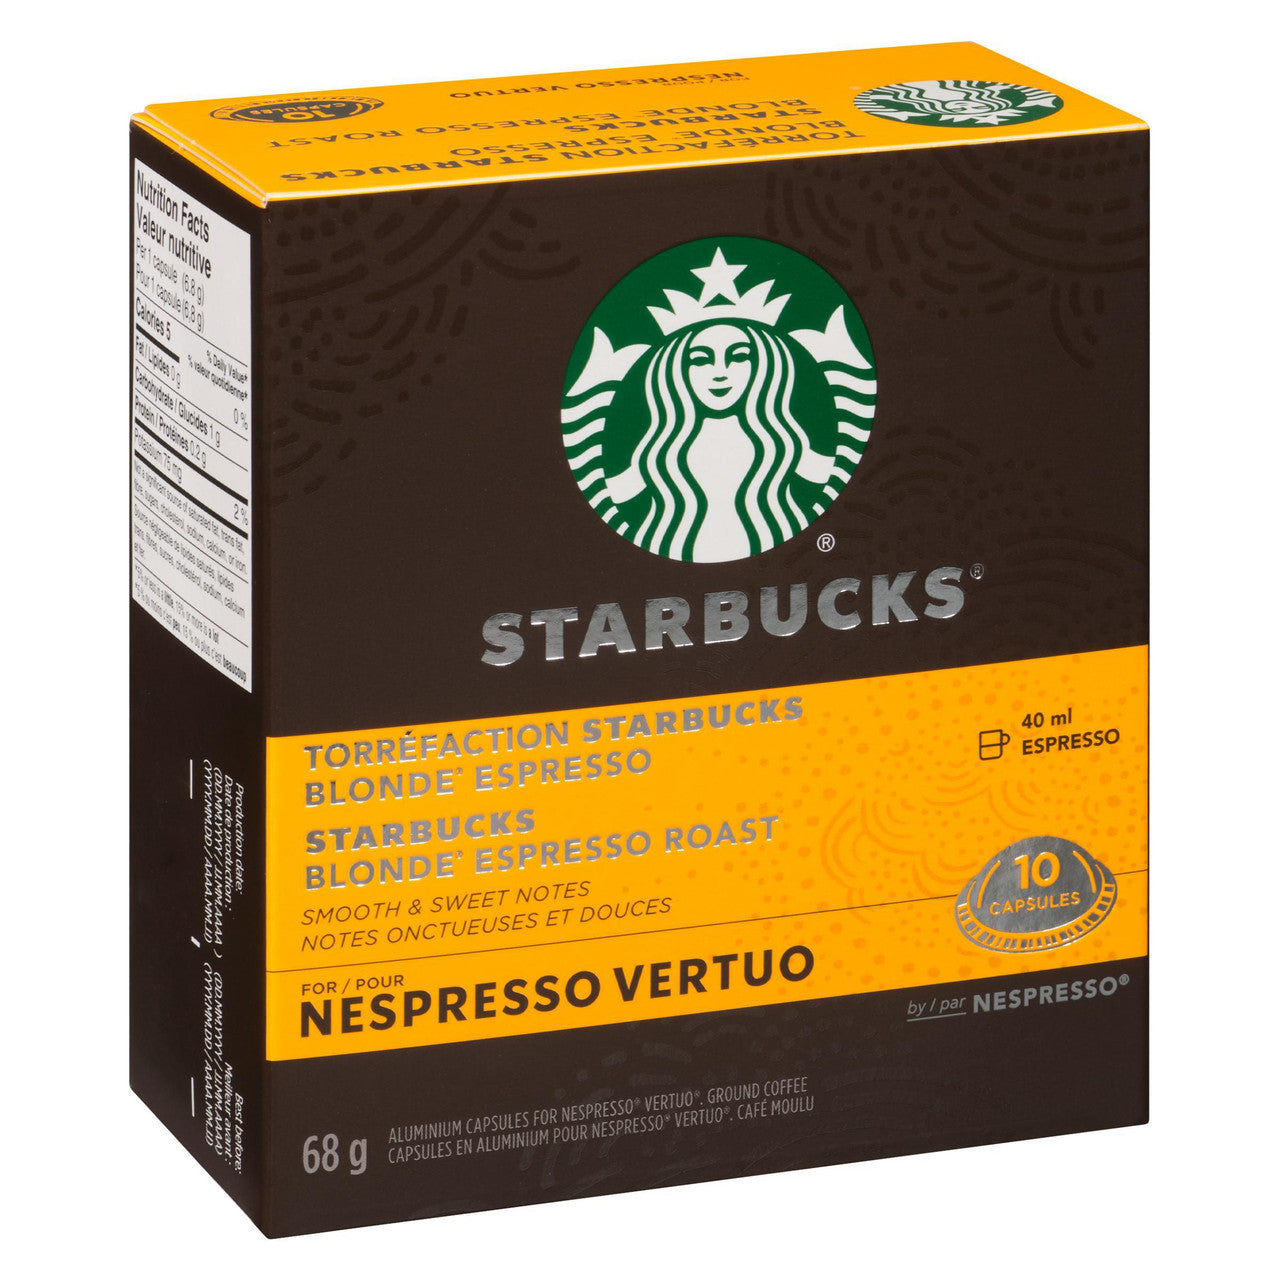 Starbucks Blonde Espresso Roast Coffee, Capsules for Nespresso